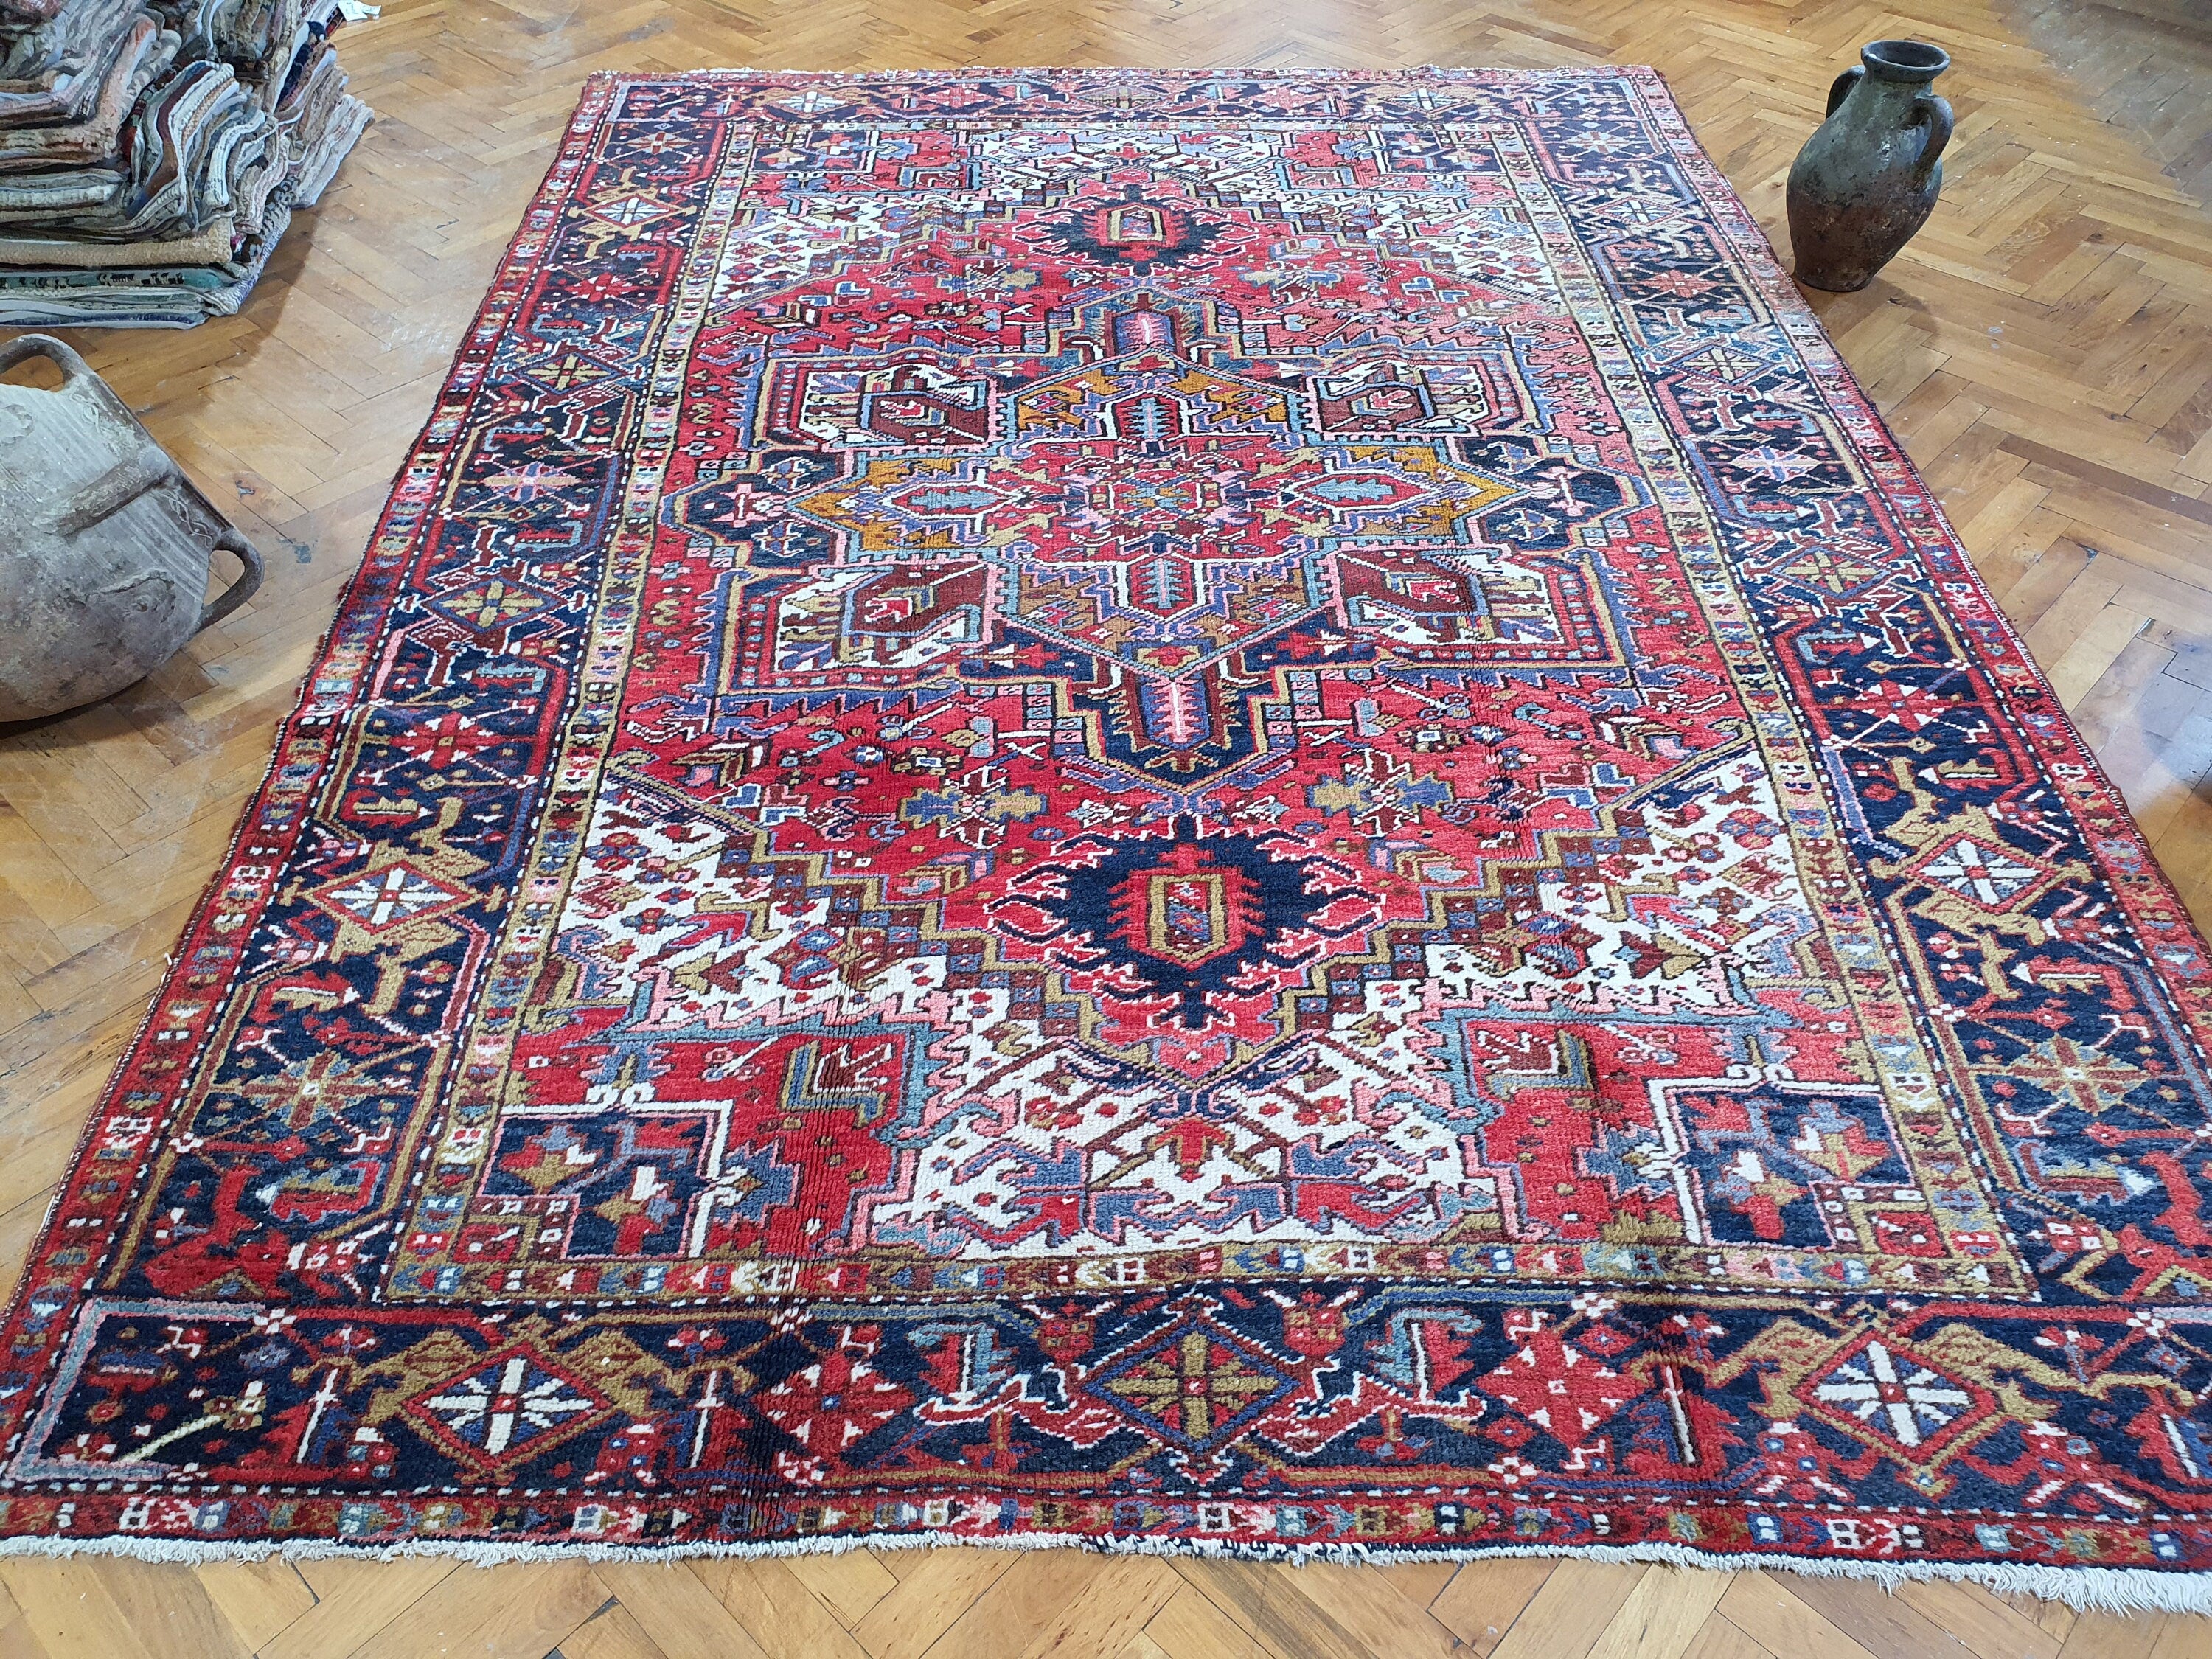 Red and Blue Persian Area Rug, 9'6'' x 6'9'' ft Vintage Turkish Tribal Organic Wool Rug, Recycled Oriental Design Rustic Floor Rug, Rug